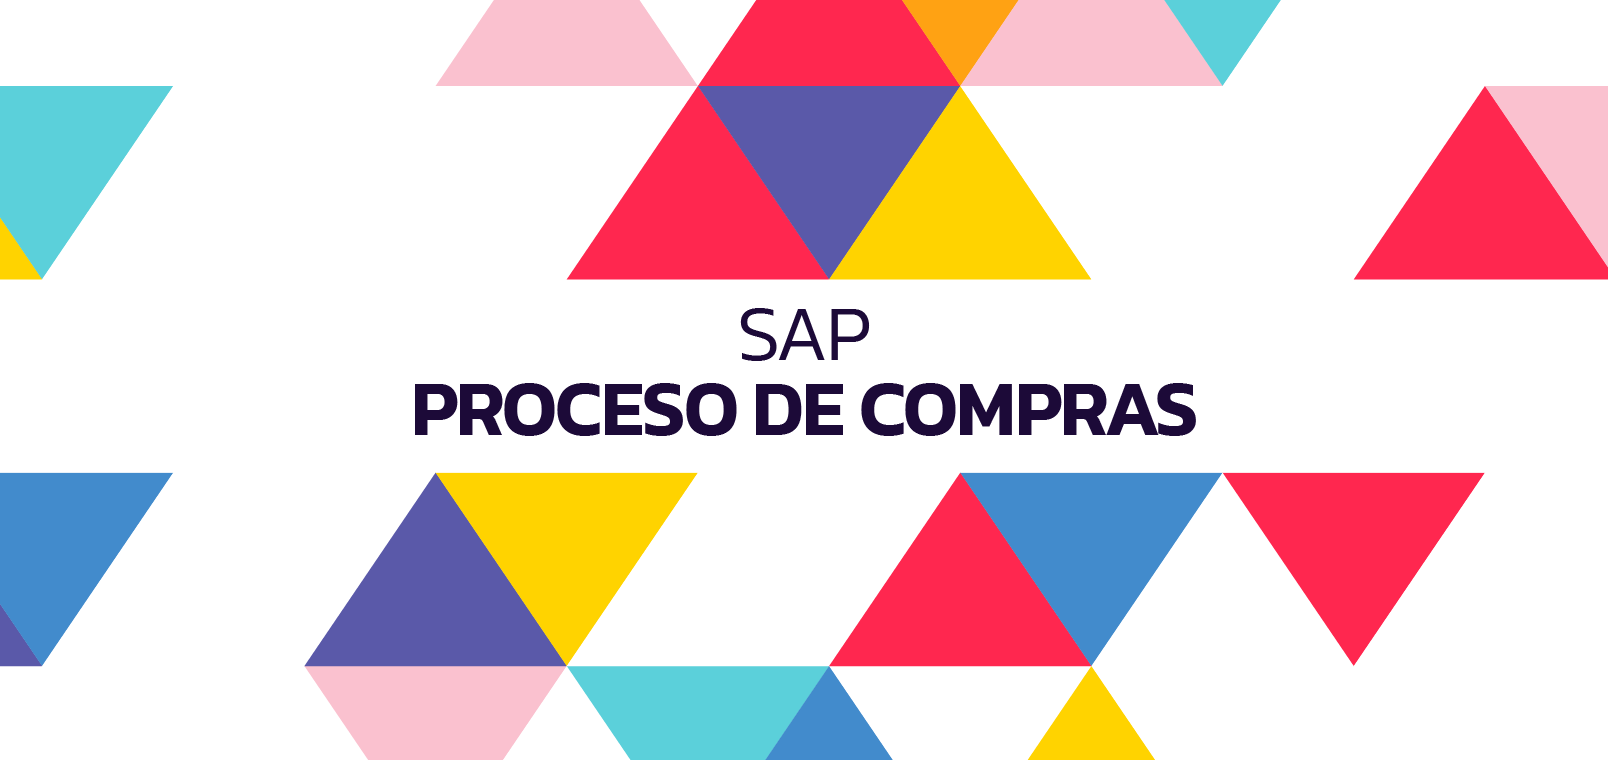 SAP - Proceso de Compras